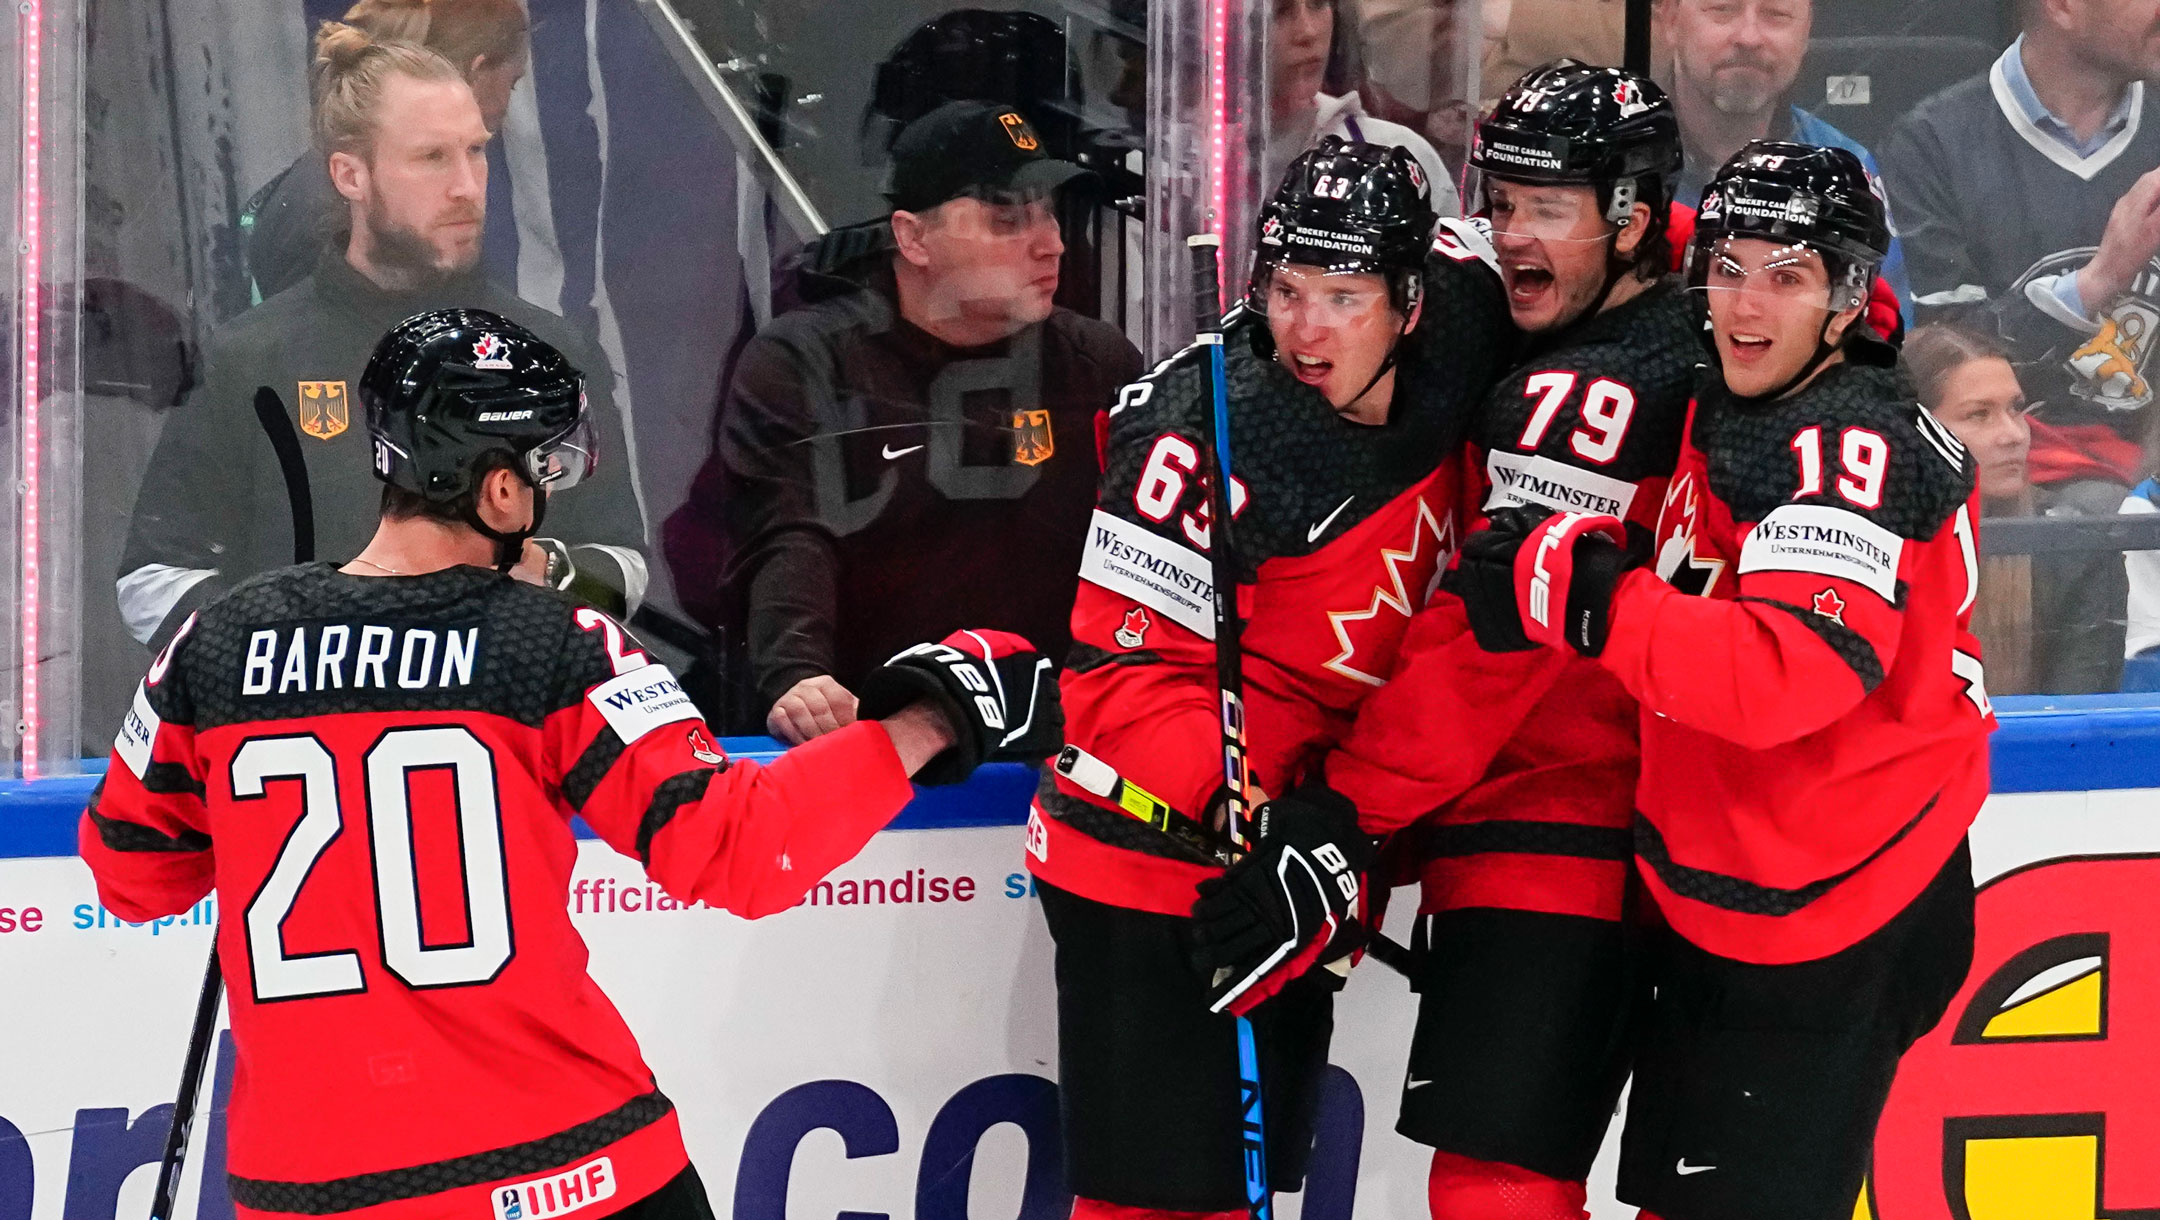 Ice Hockey-Canada defeat Germany to win World Championship gold